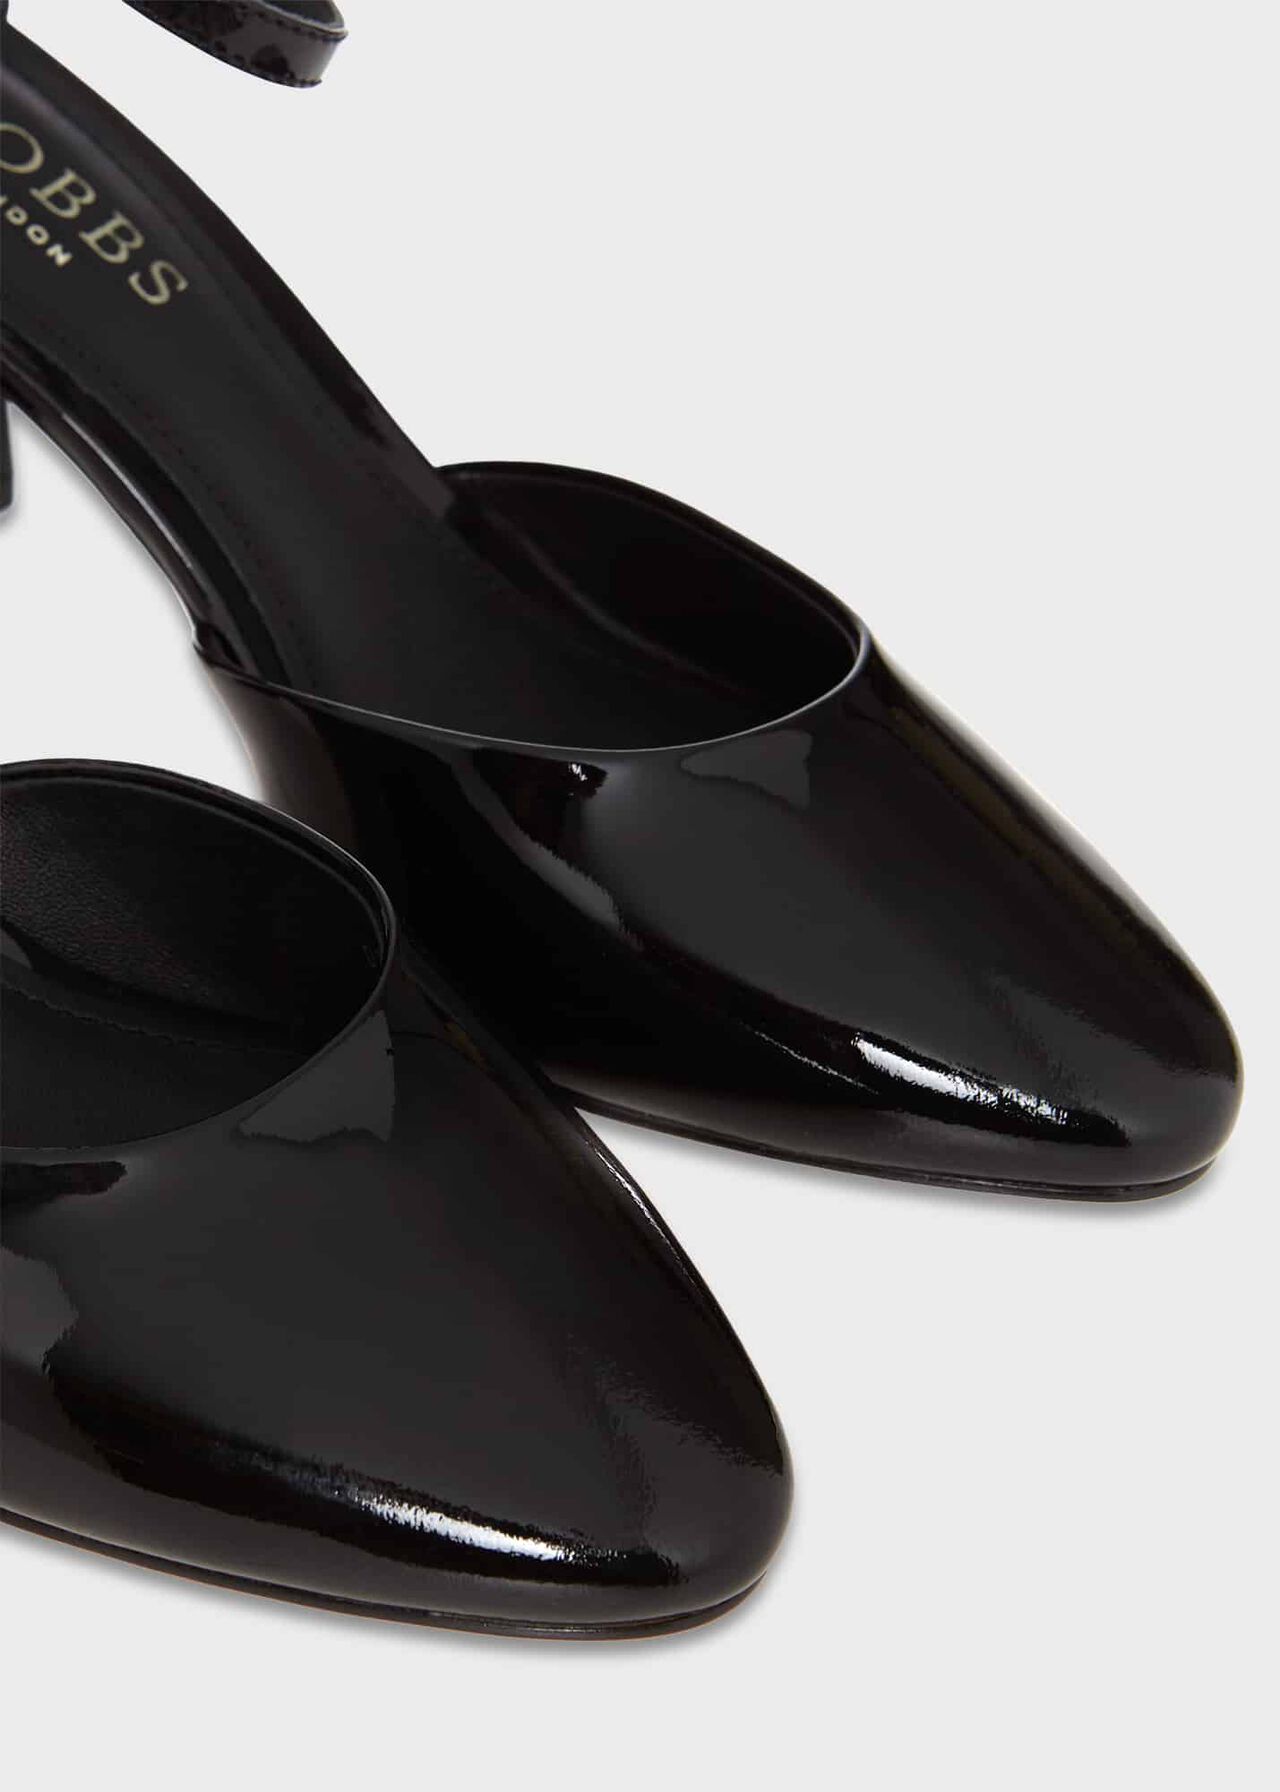 Sonia Court Shoes, Black, hi-res